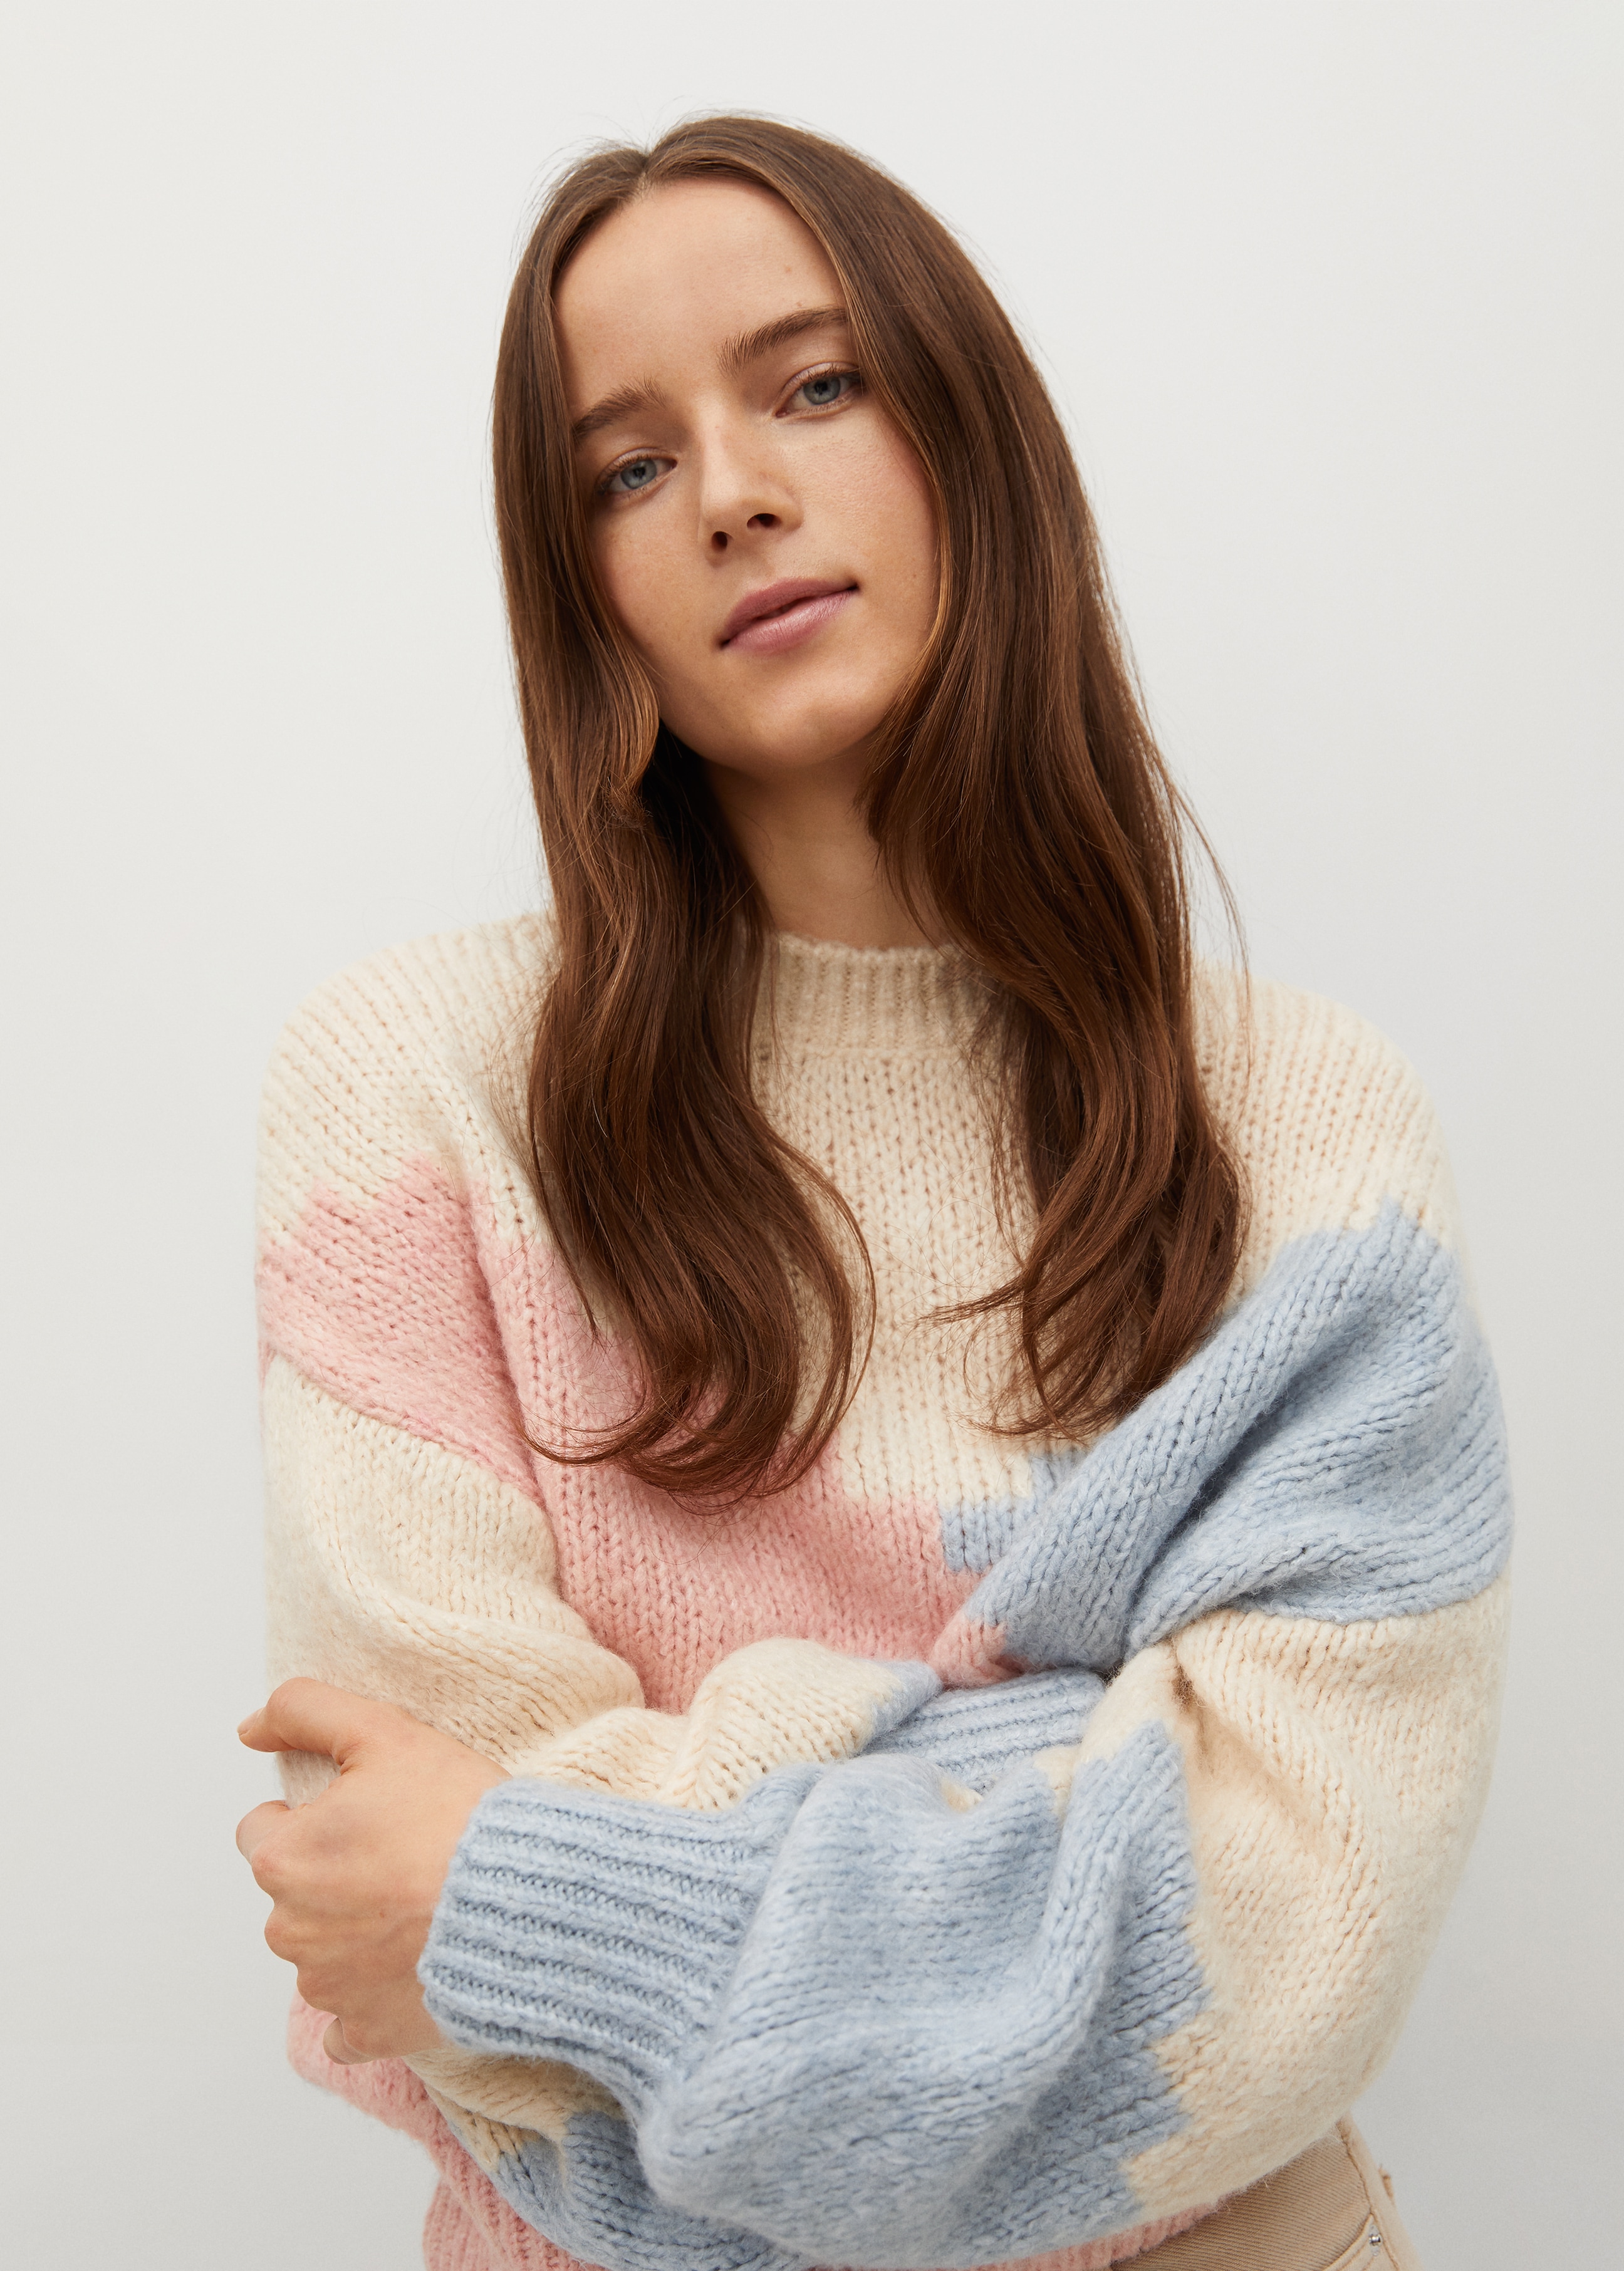 Multi-colored knit sweater - Medium plane